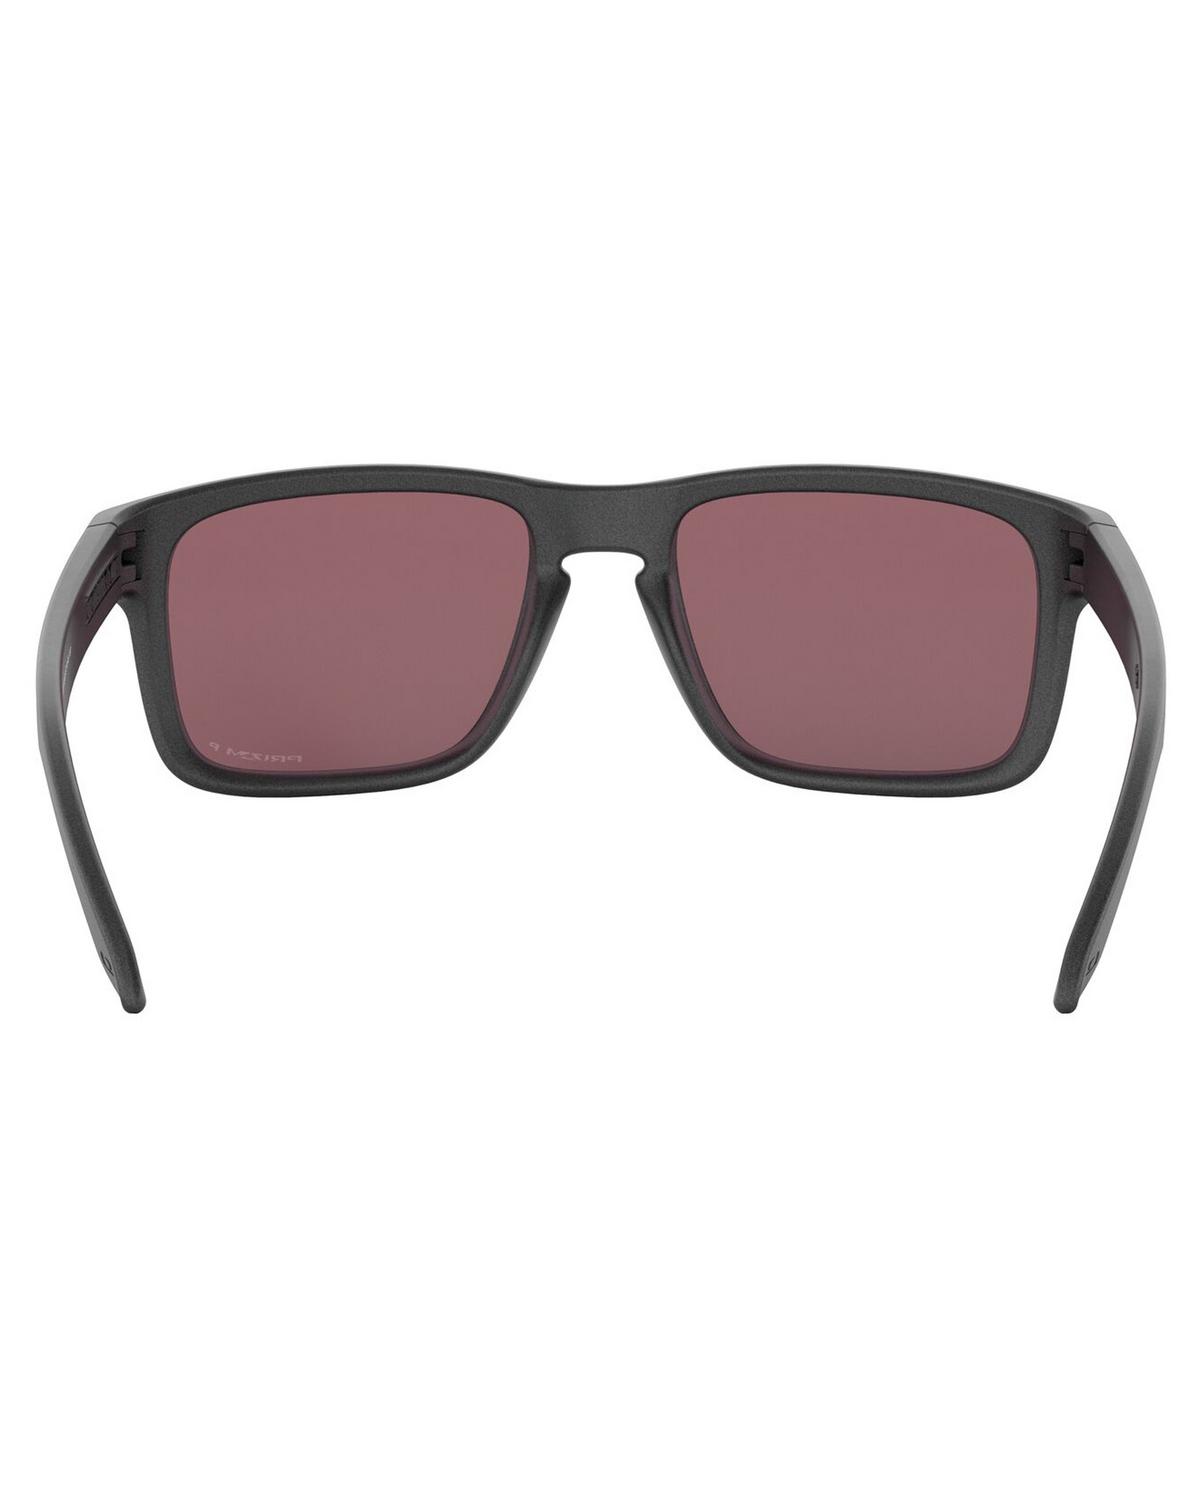 Oakley Holbrook Sunglasses -  Light Grey